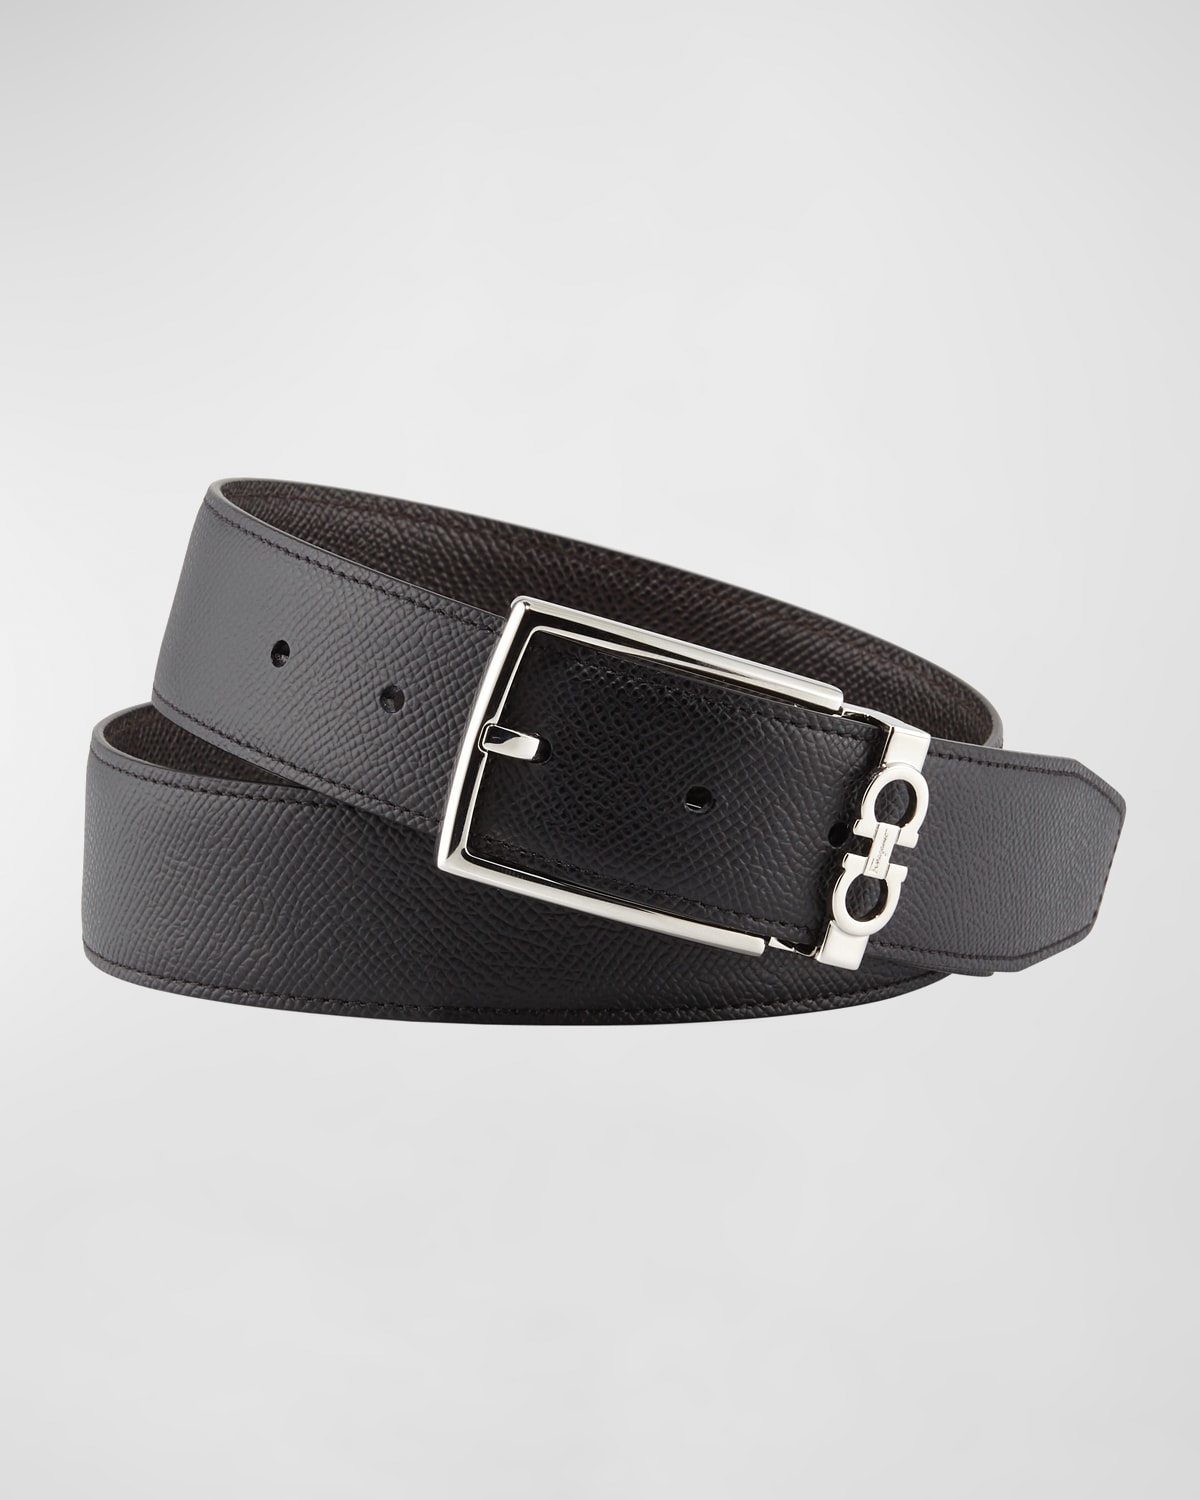 Ferragamo Men's Reversible Textured Leather Belt with Beveled Gancini ...